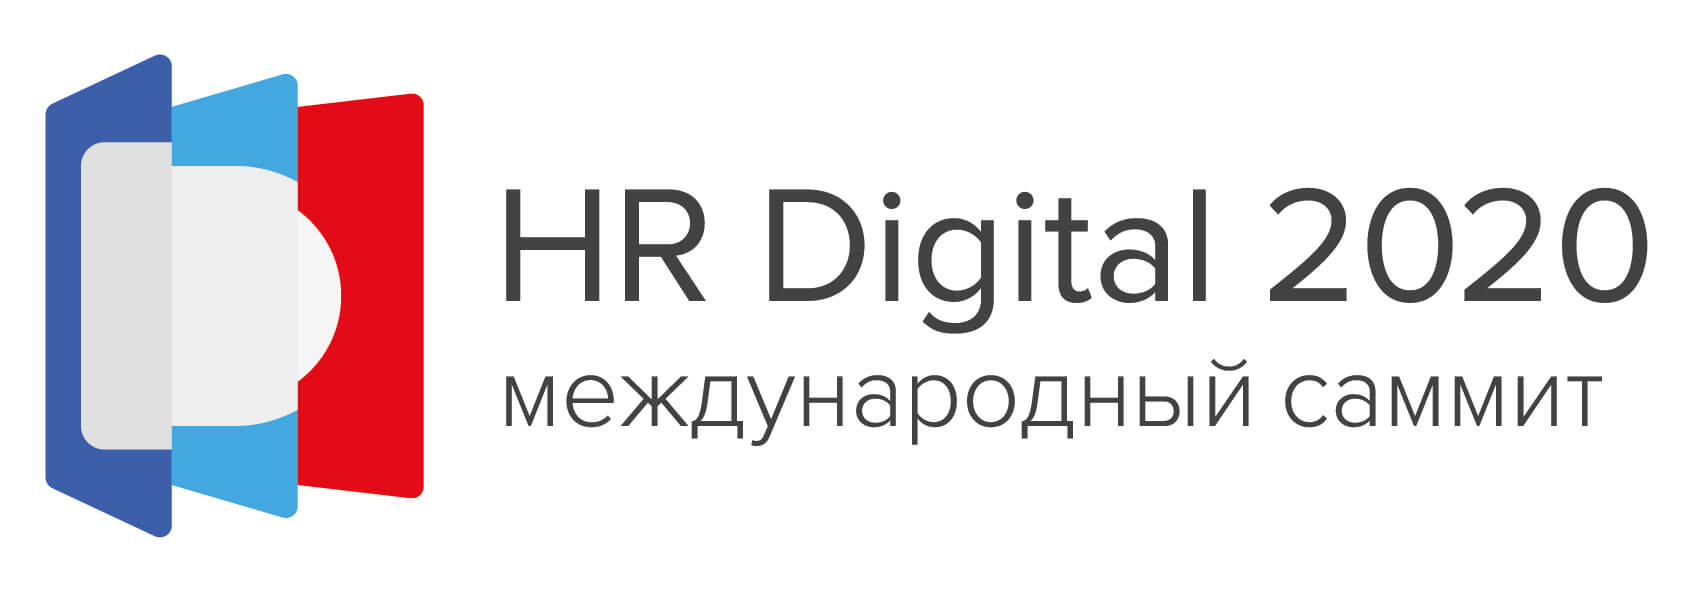 HR Digital 2020